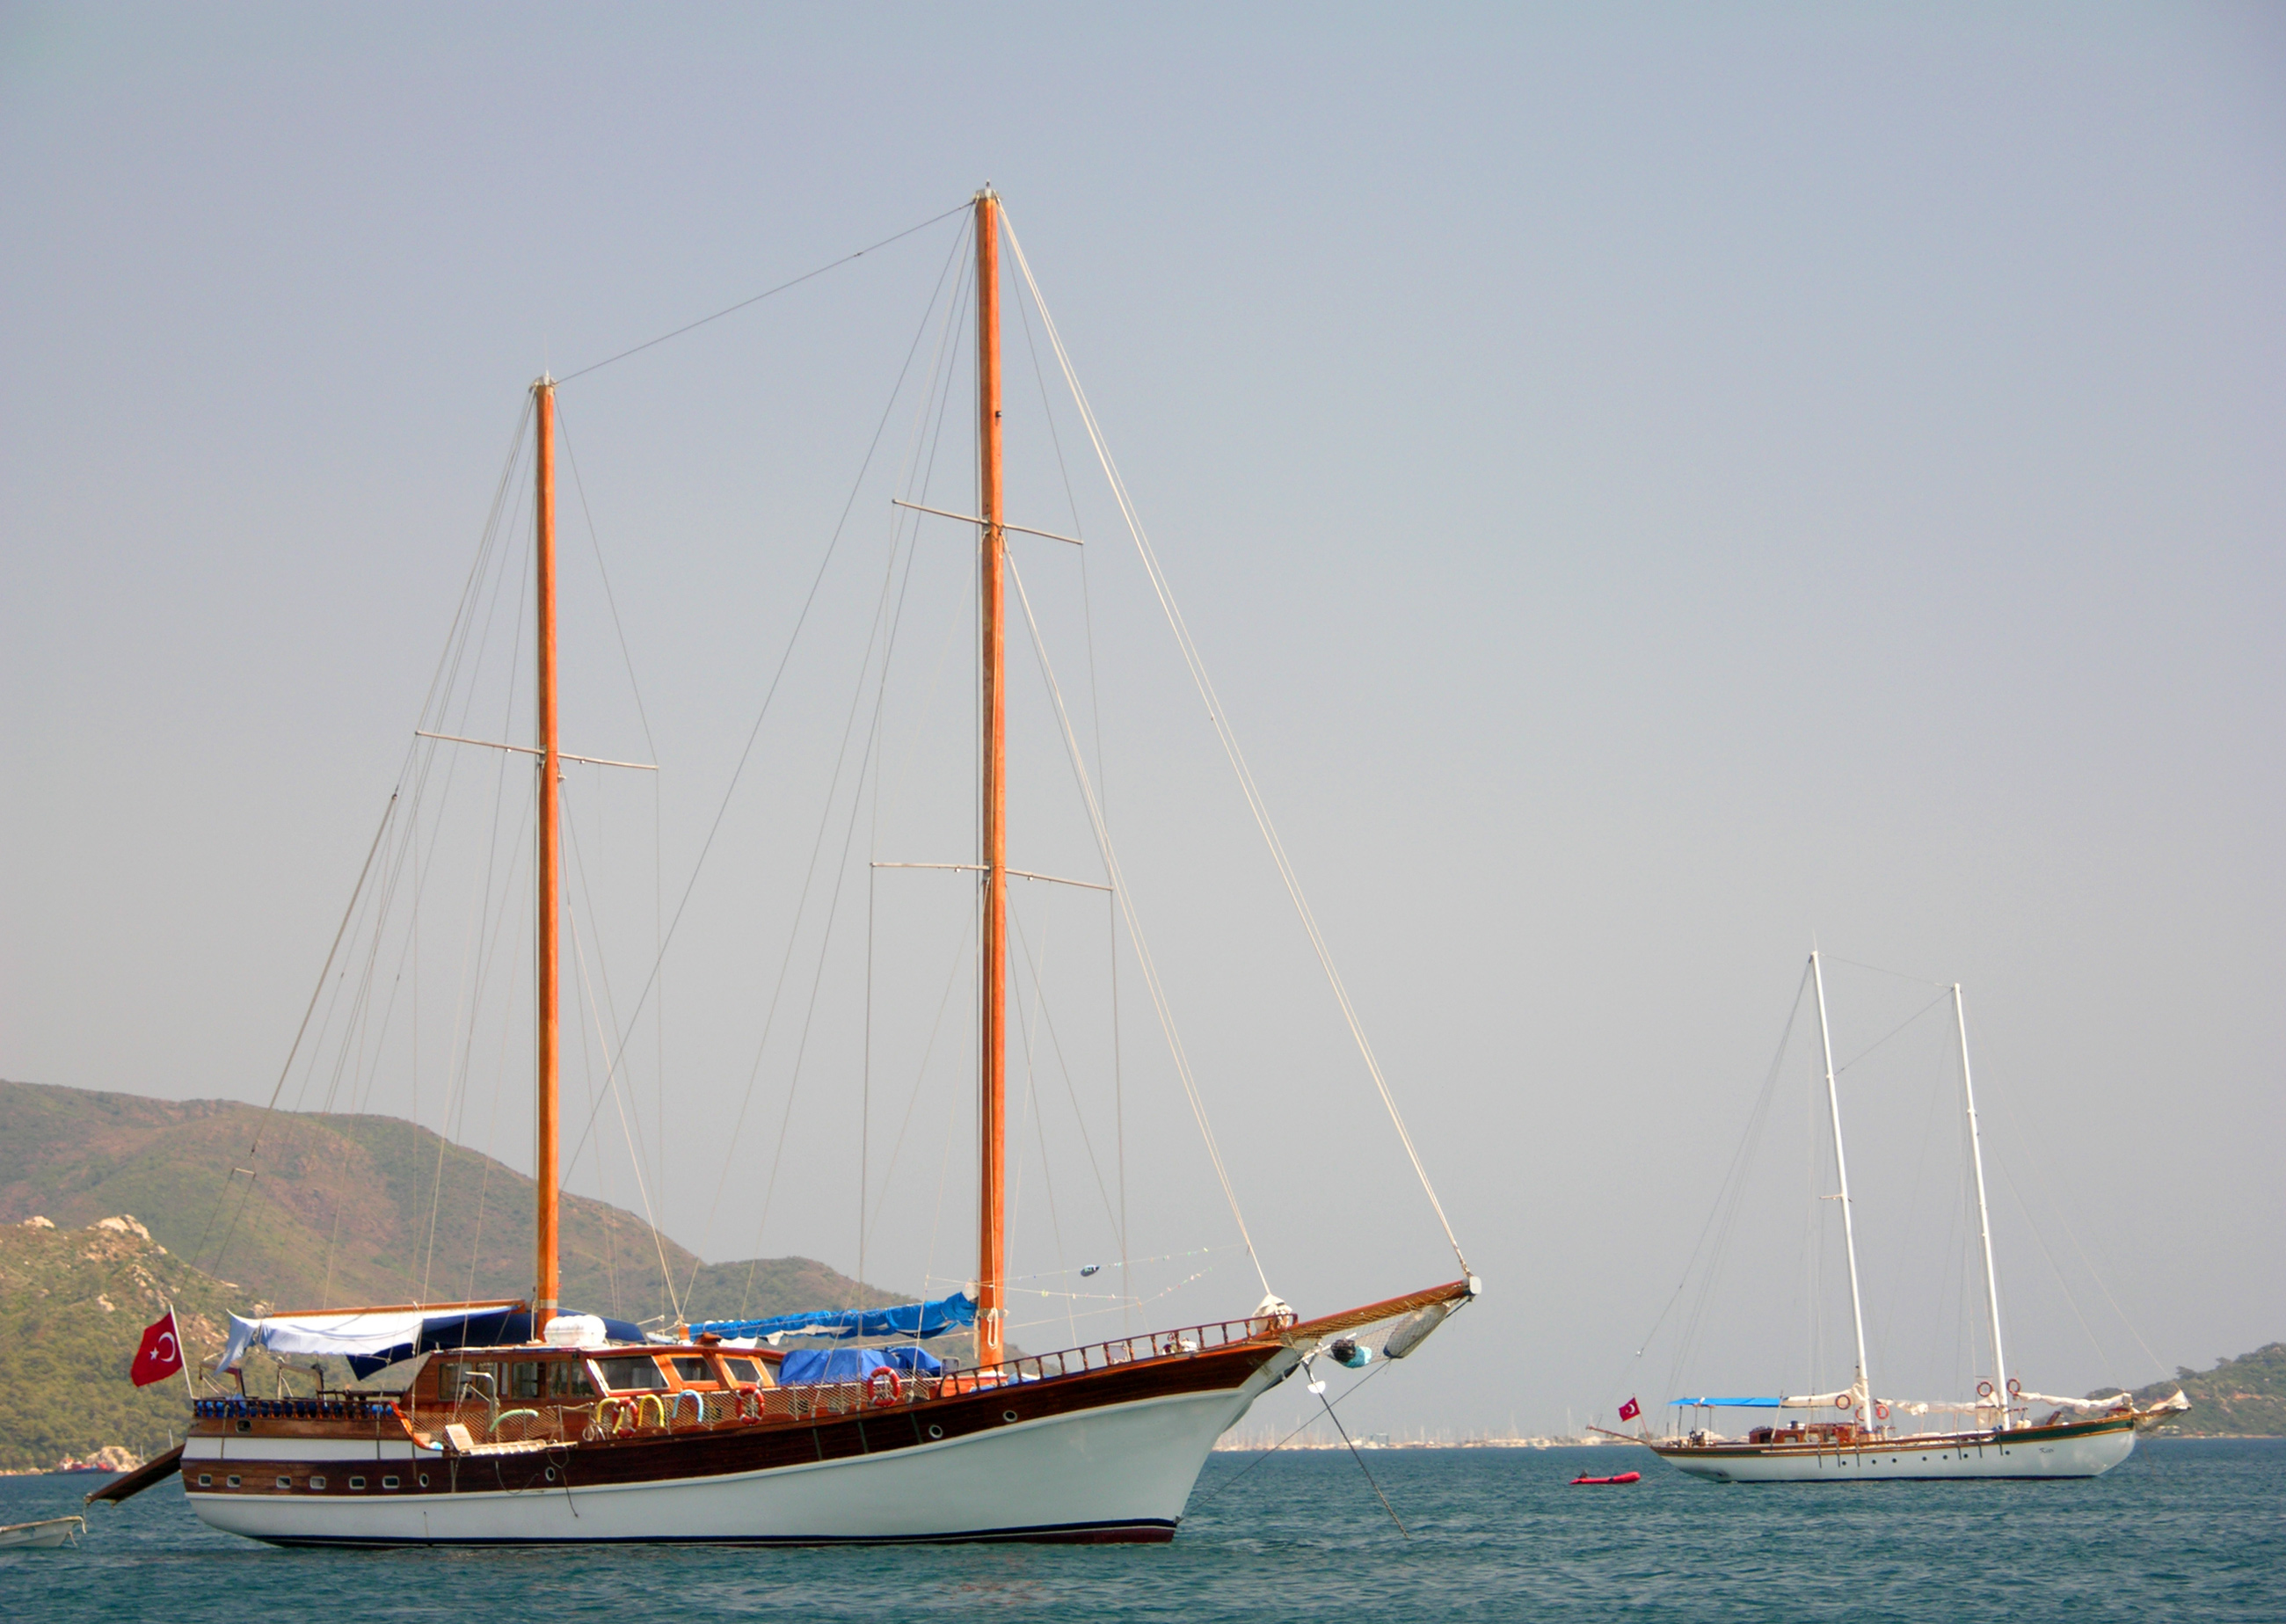 Sailboats moored in bay